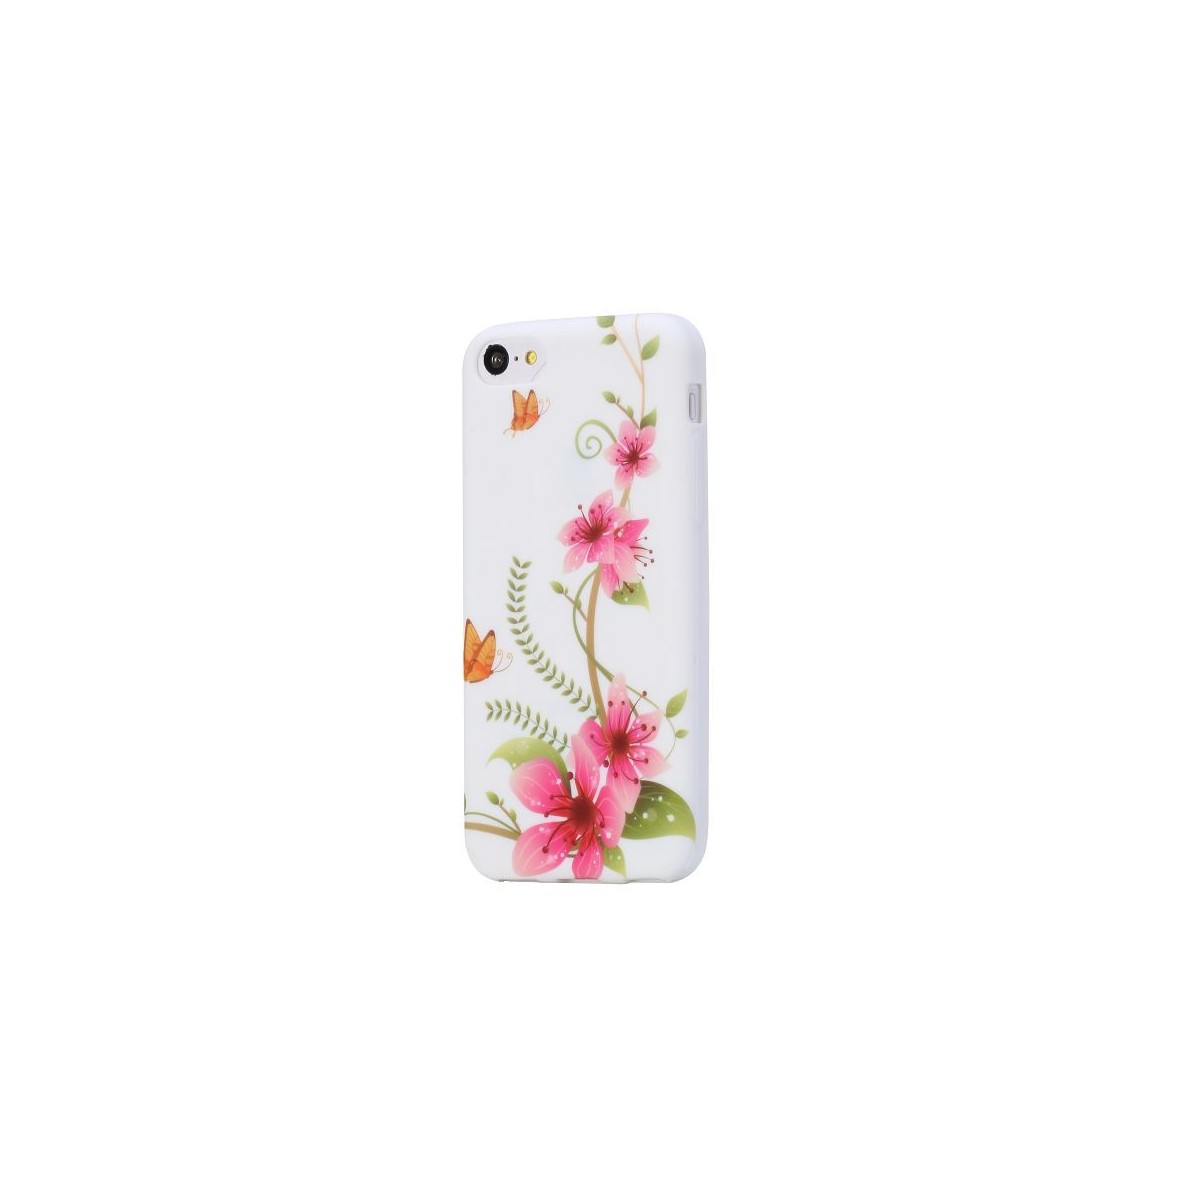 Coque iPhone 5C silicone floral météorite